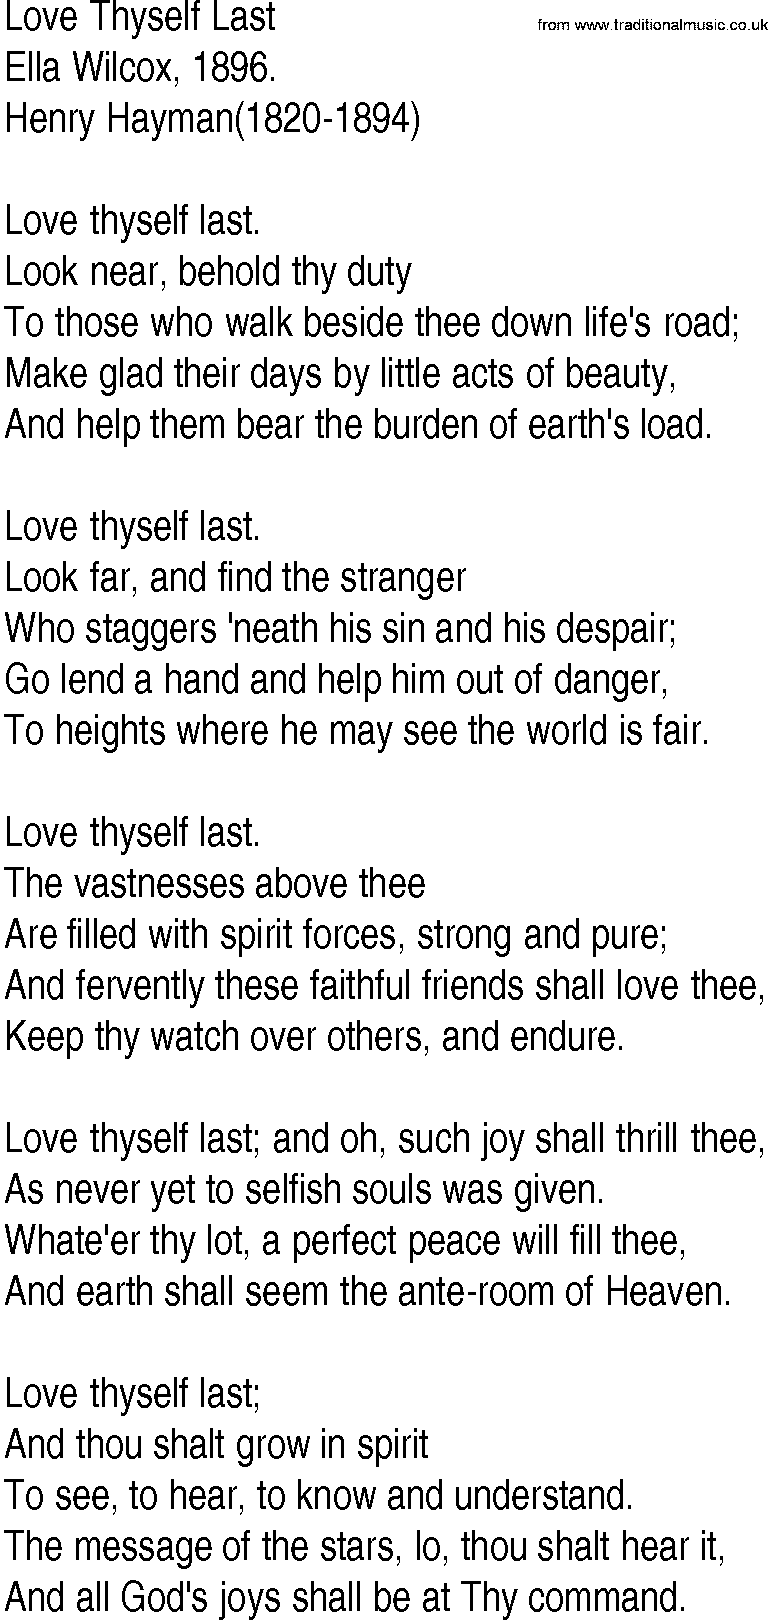 Hymn and Gospel Song: Love Thyself Last by Ella Wilcox lyrics